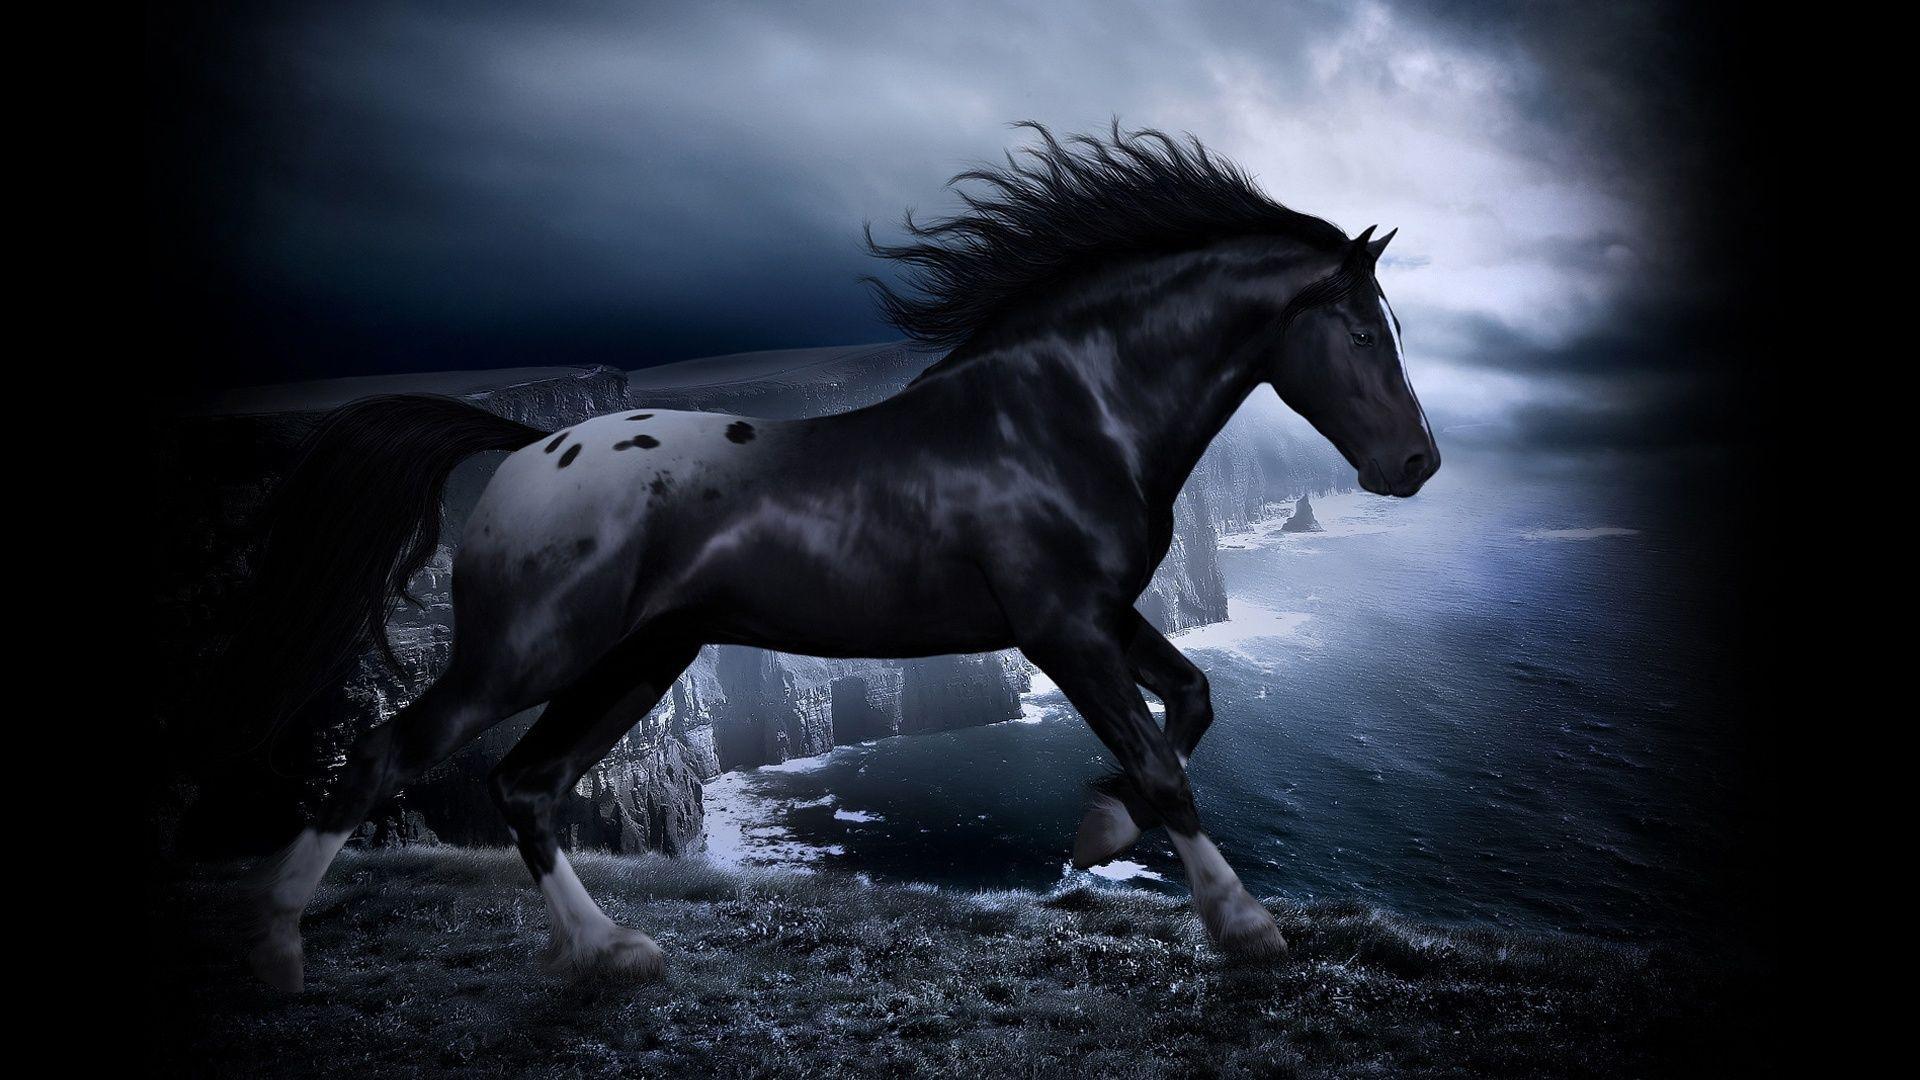 Horse in the dark Wallpaperx1080 resolution wallpaper